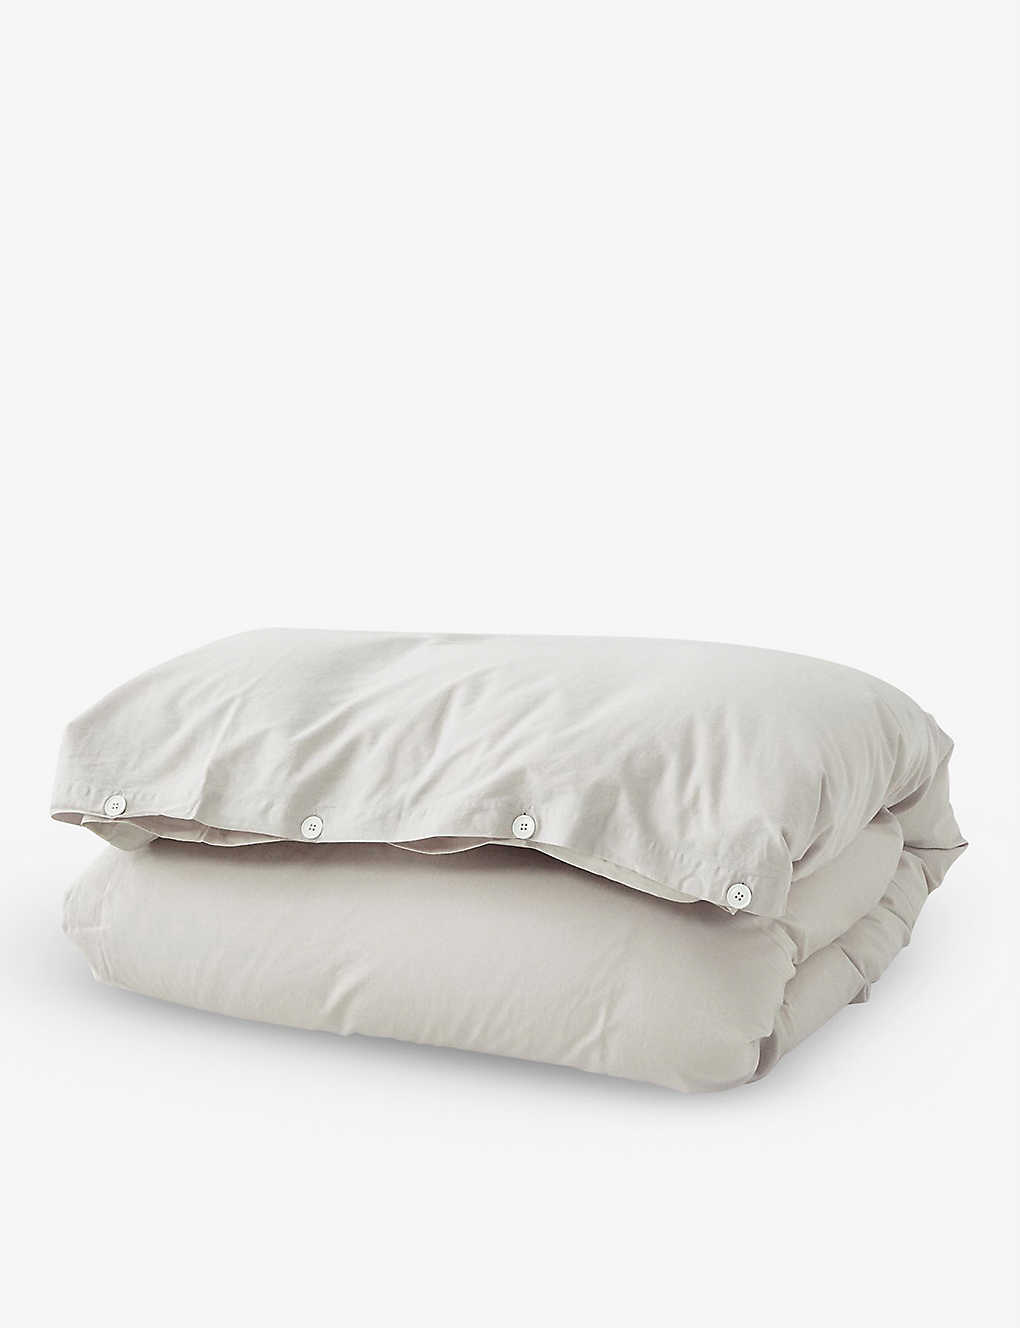 Tekla Grey Organic Cotton-percale Single Duvet Cover 200cm X 140cm